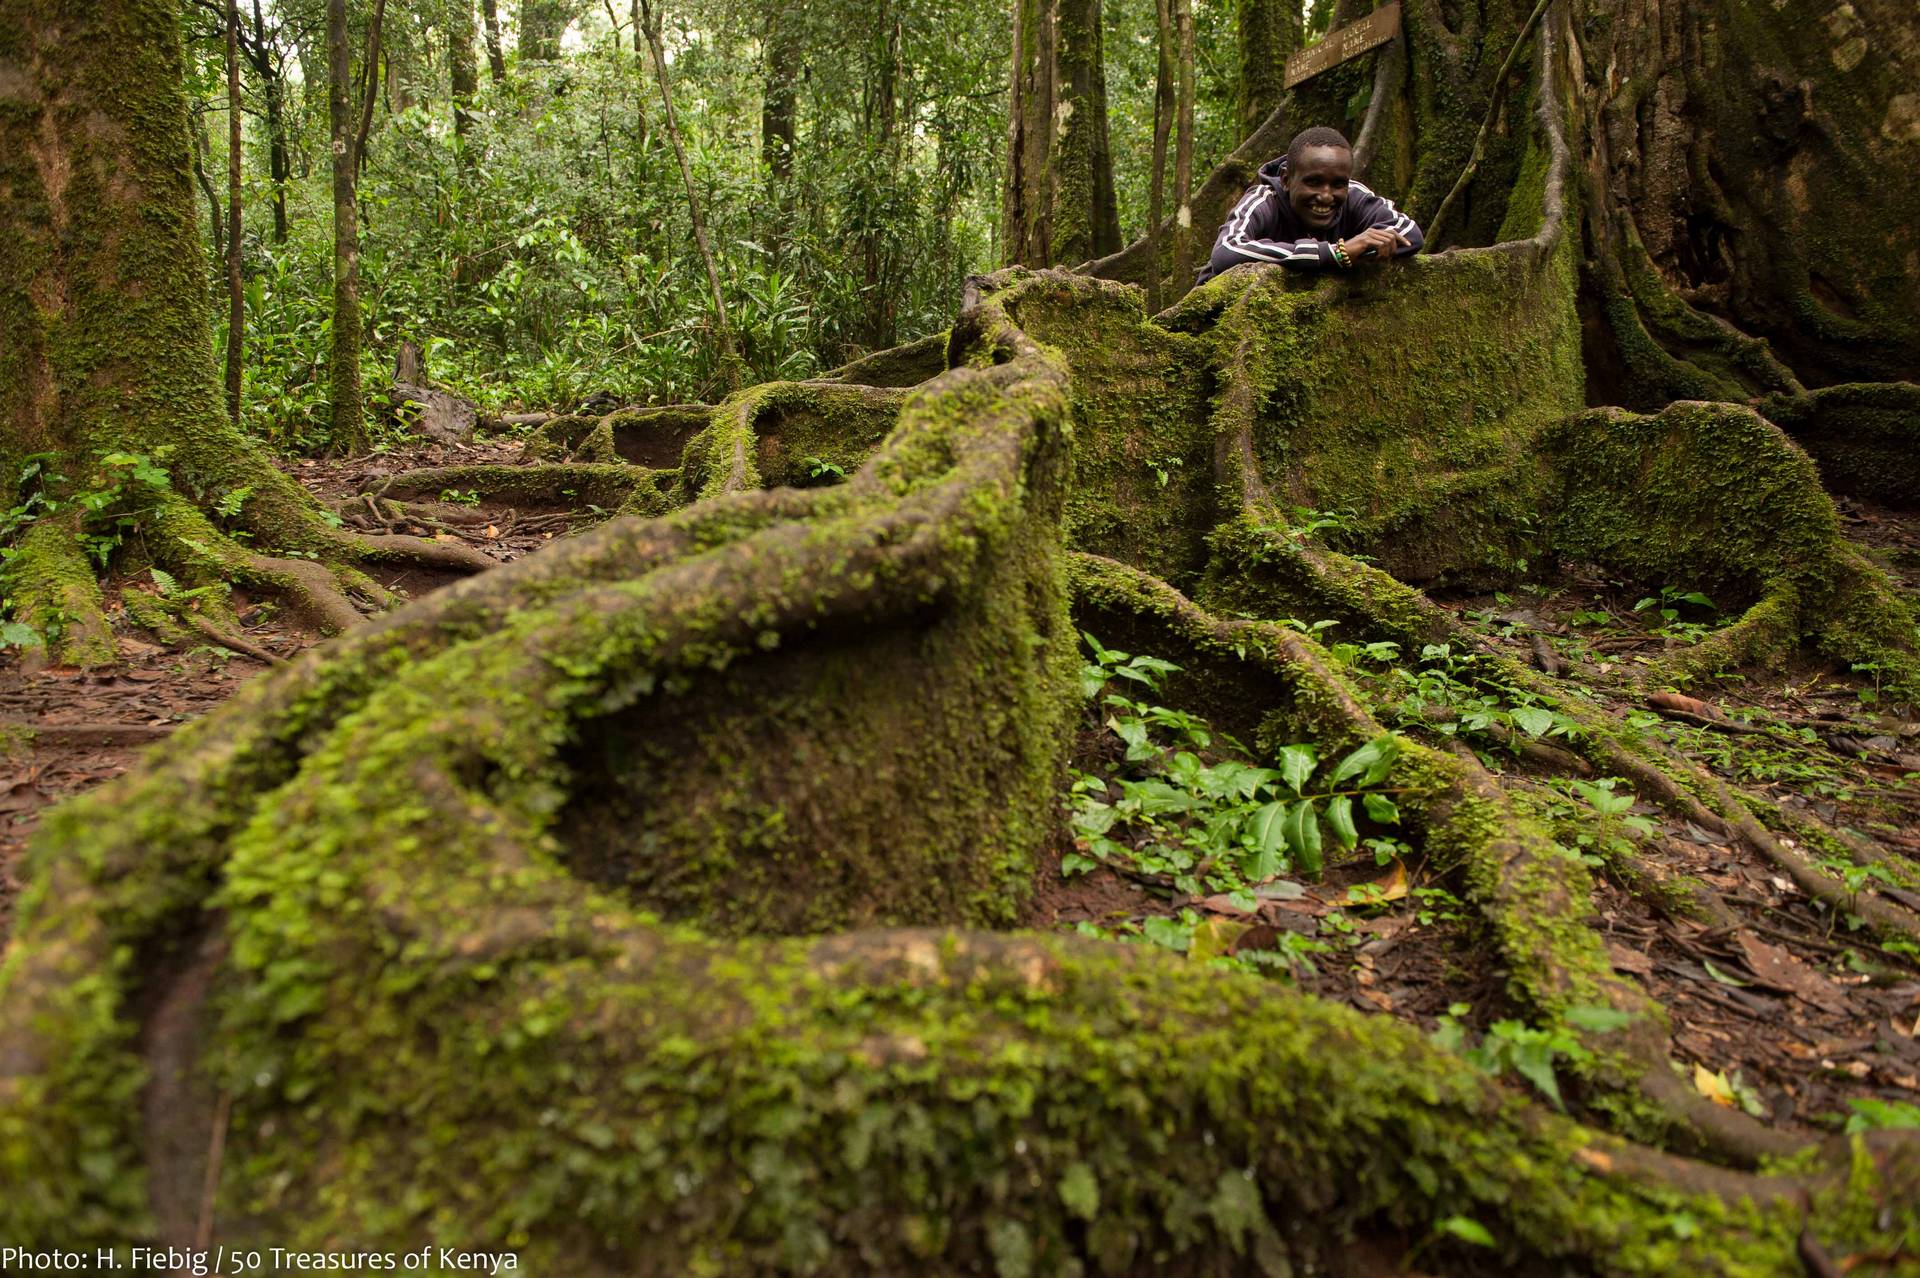 Kawasan hutan hujan tropis terlebat di dunia adalah